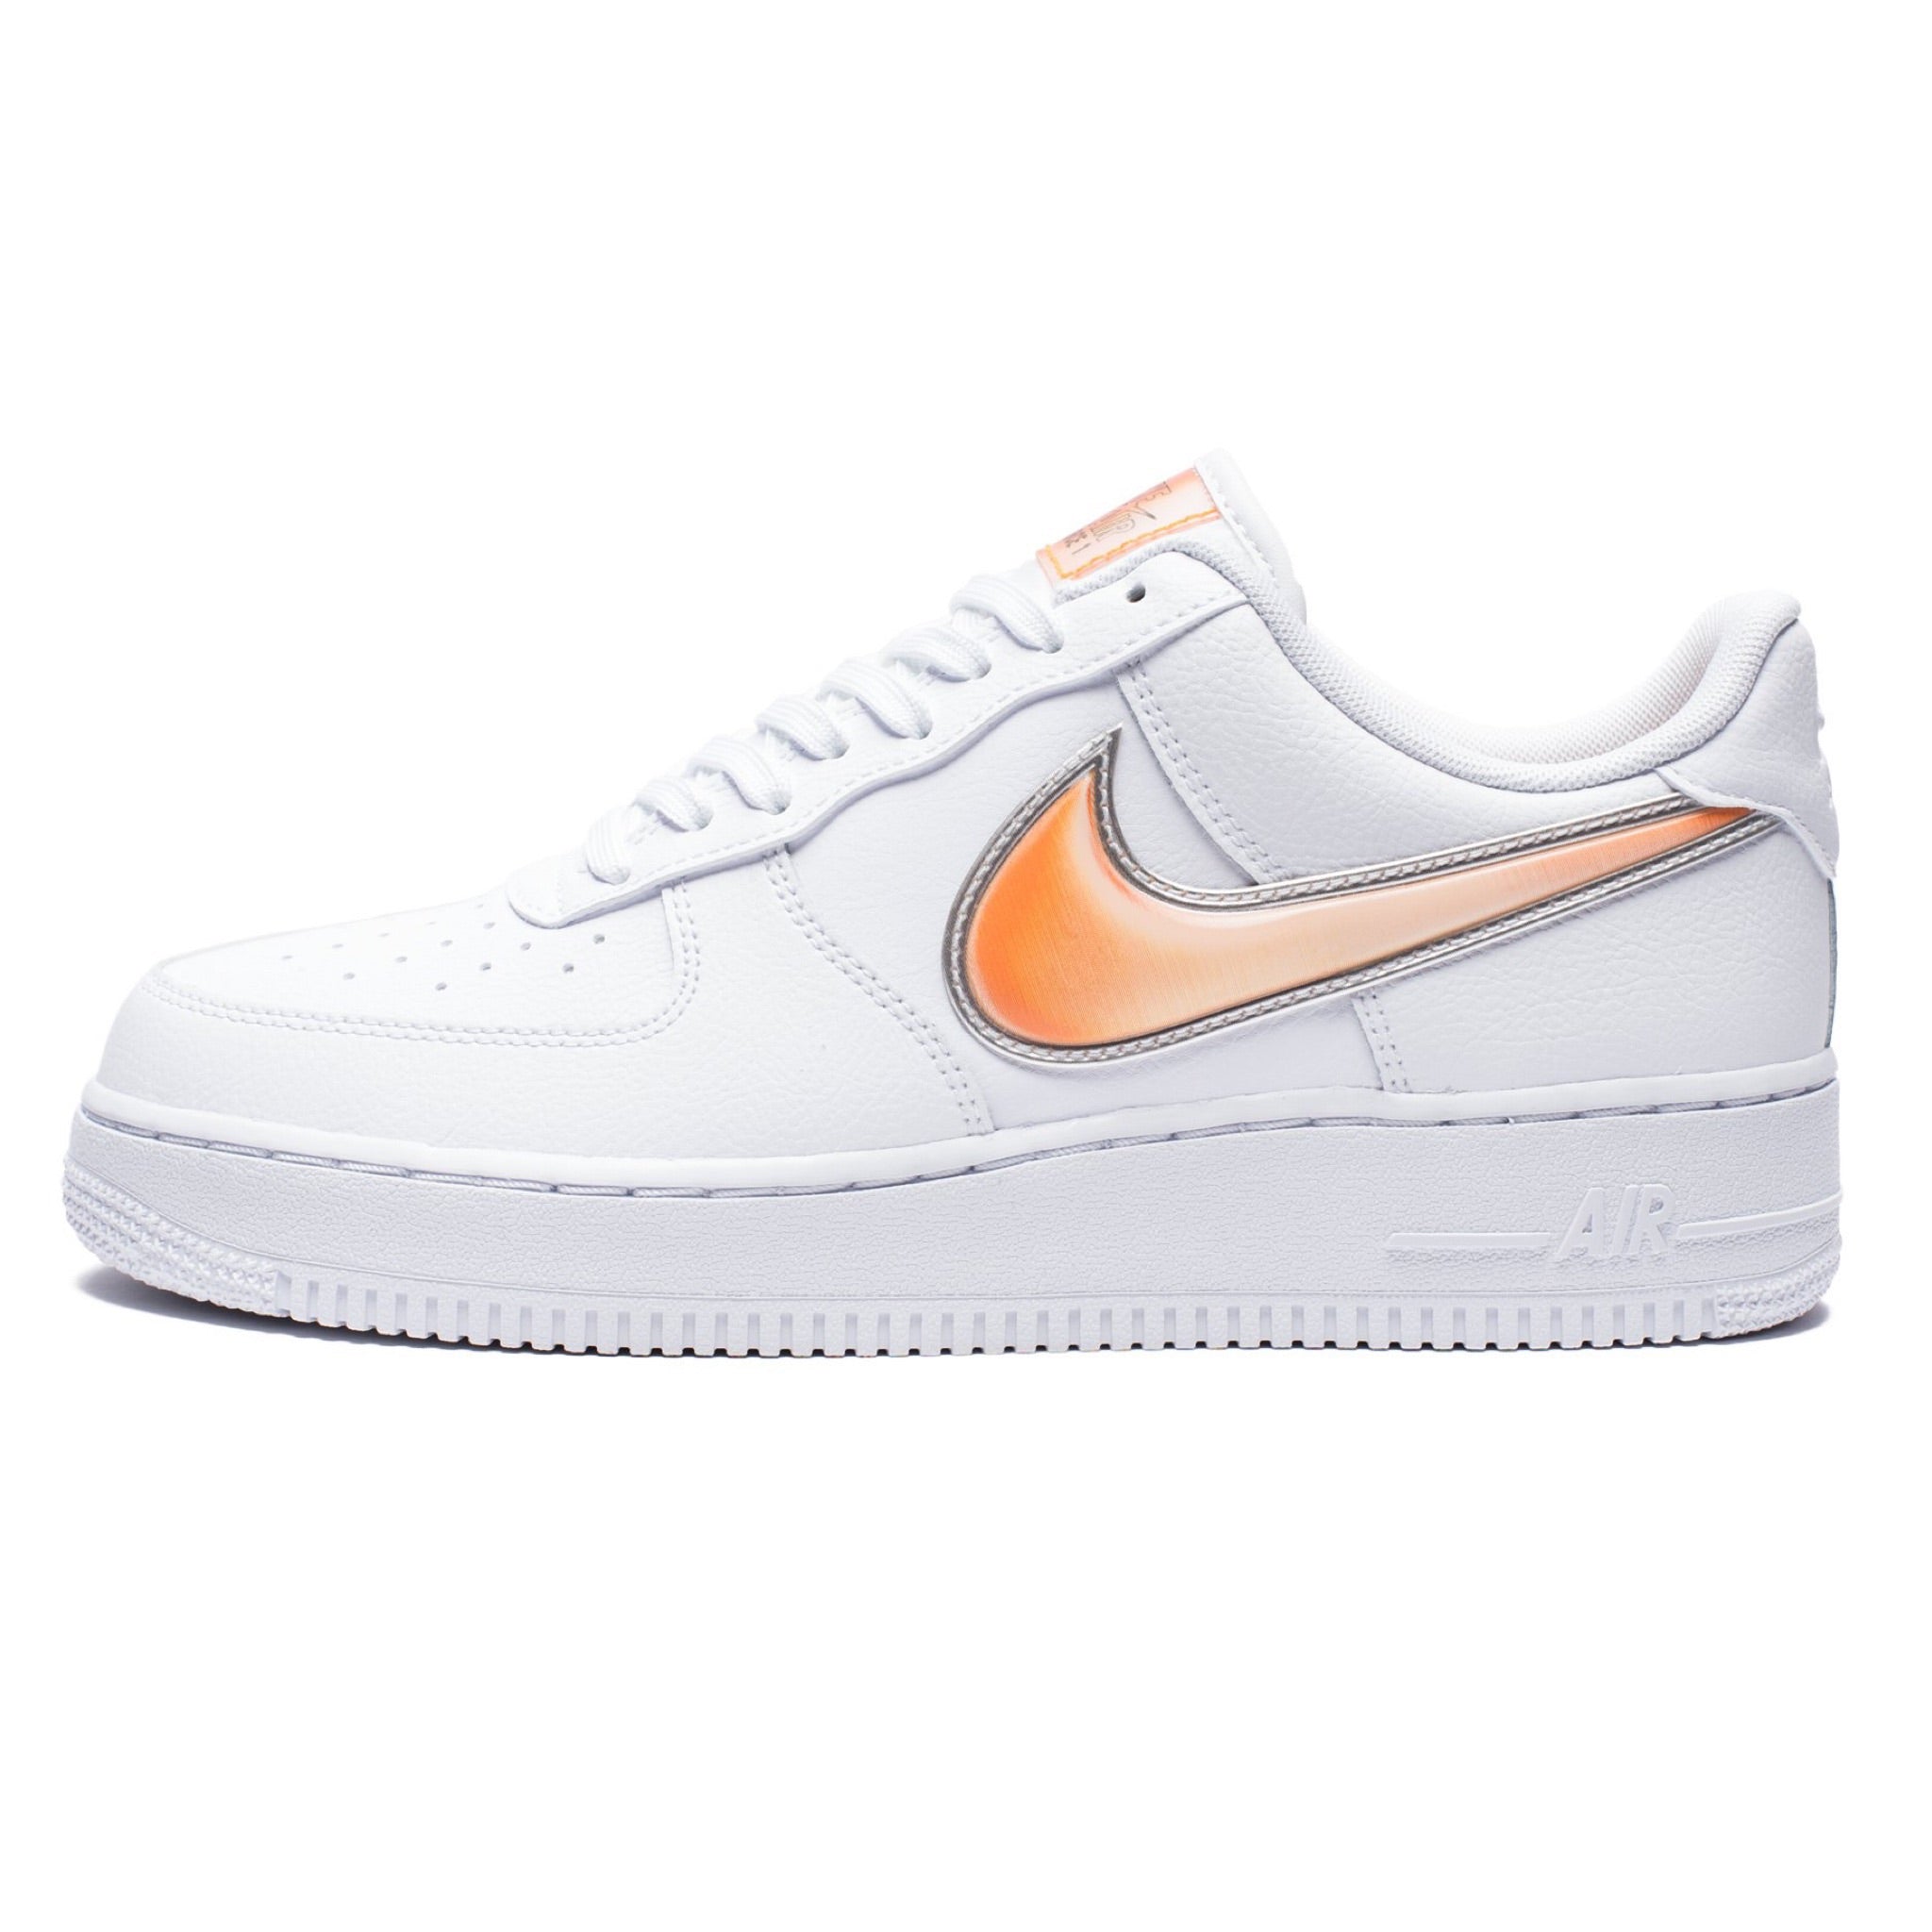 Nike Air Force 1 '07 LV8 3 White Orange 